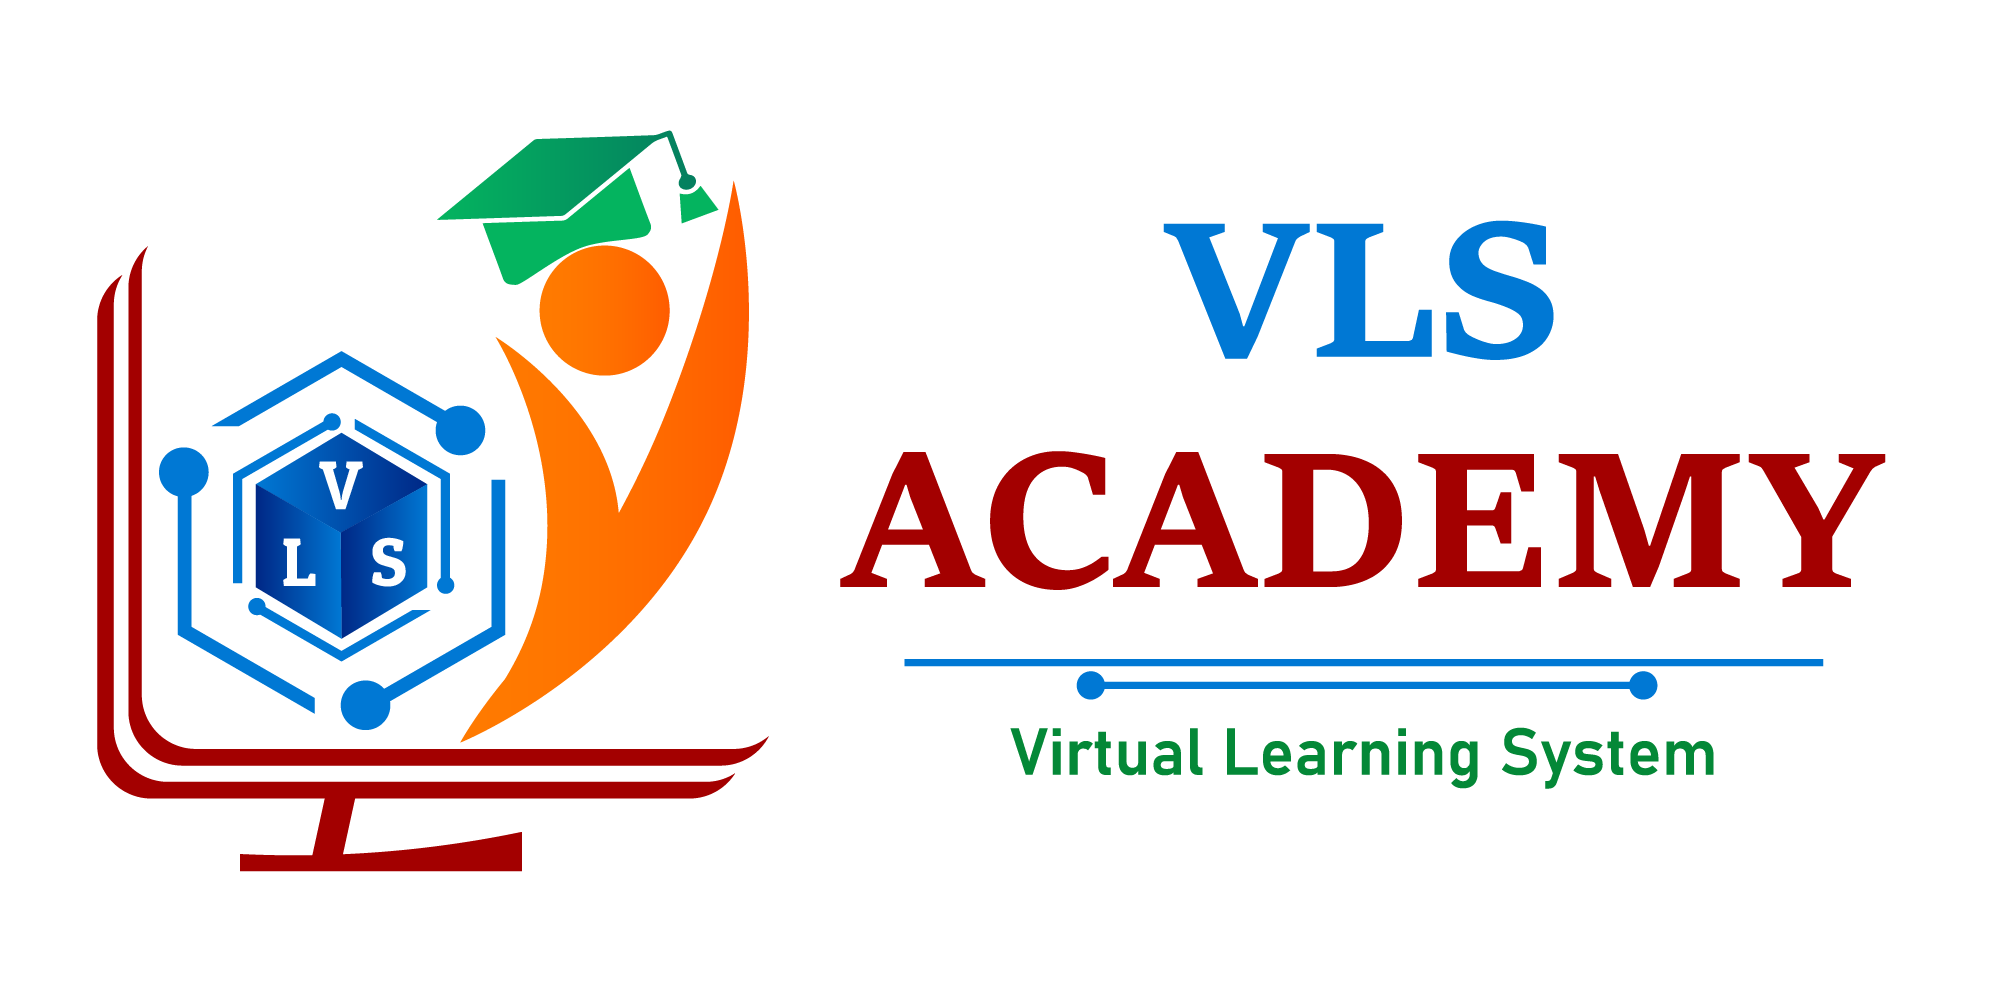 VLS Academy